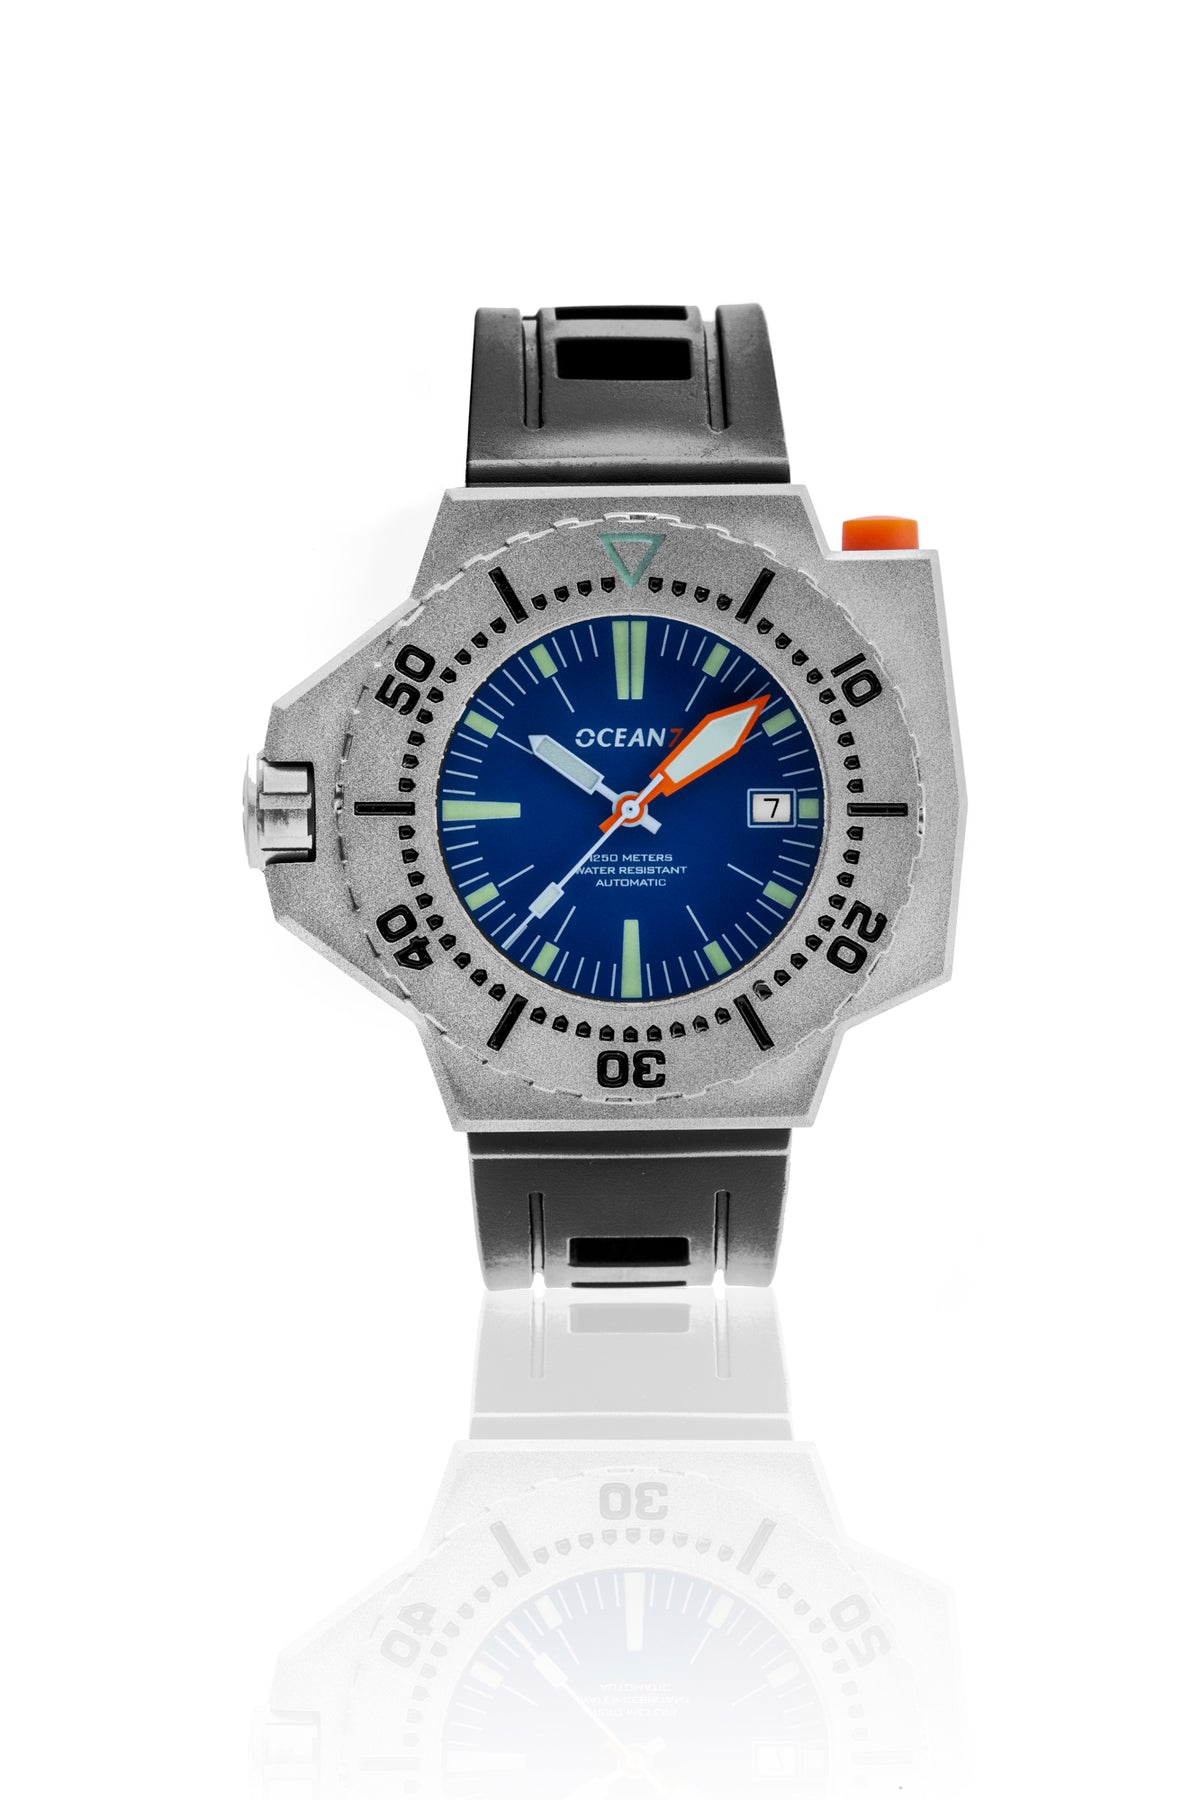 LM-7 Professional Hardened Titanium Dive Watch